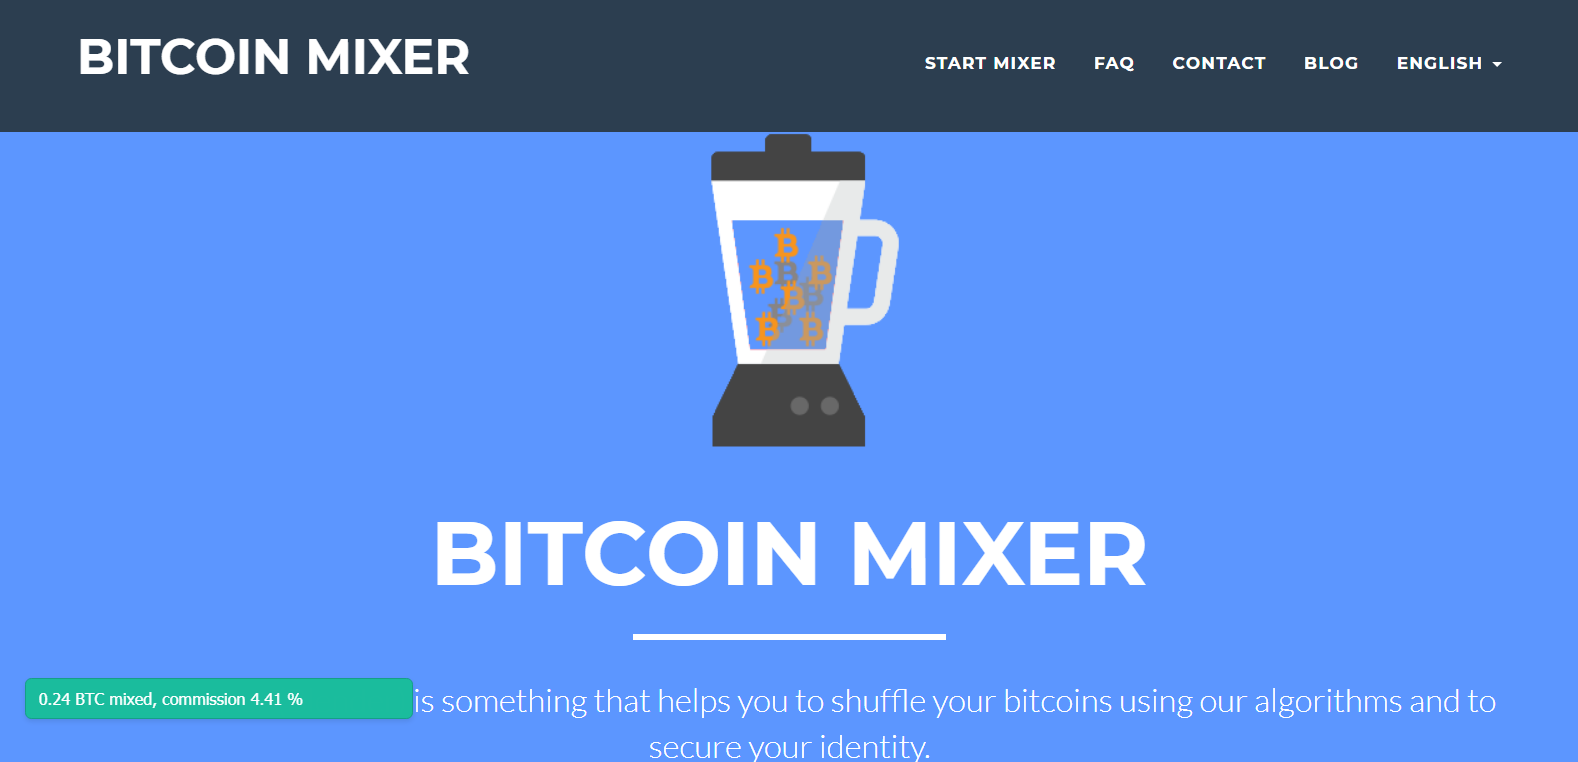 Dogecoin mixer. Cryptocurrency tumbler